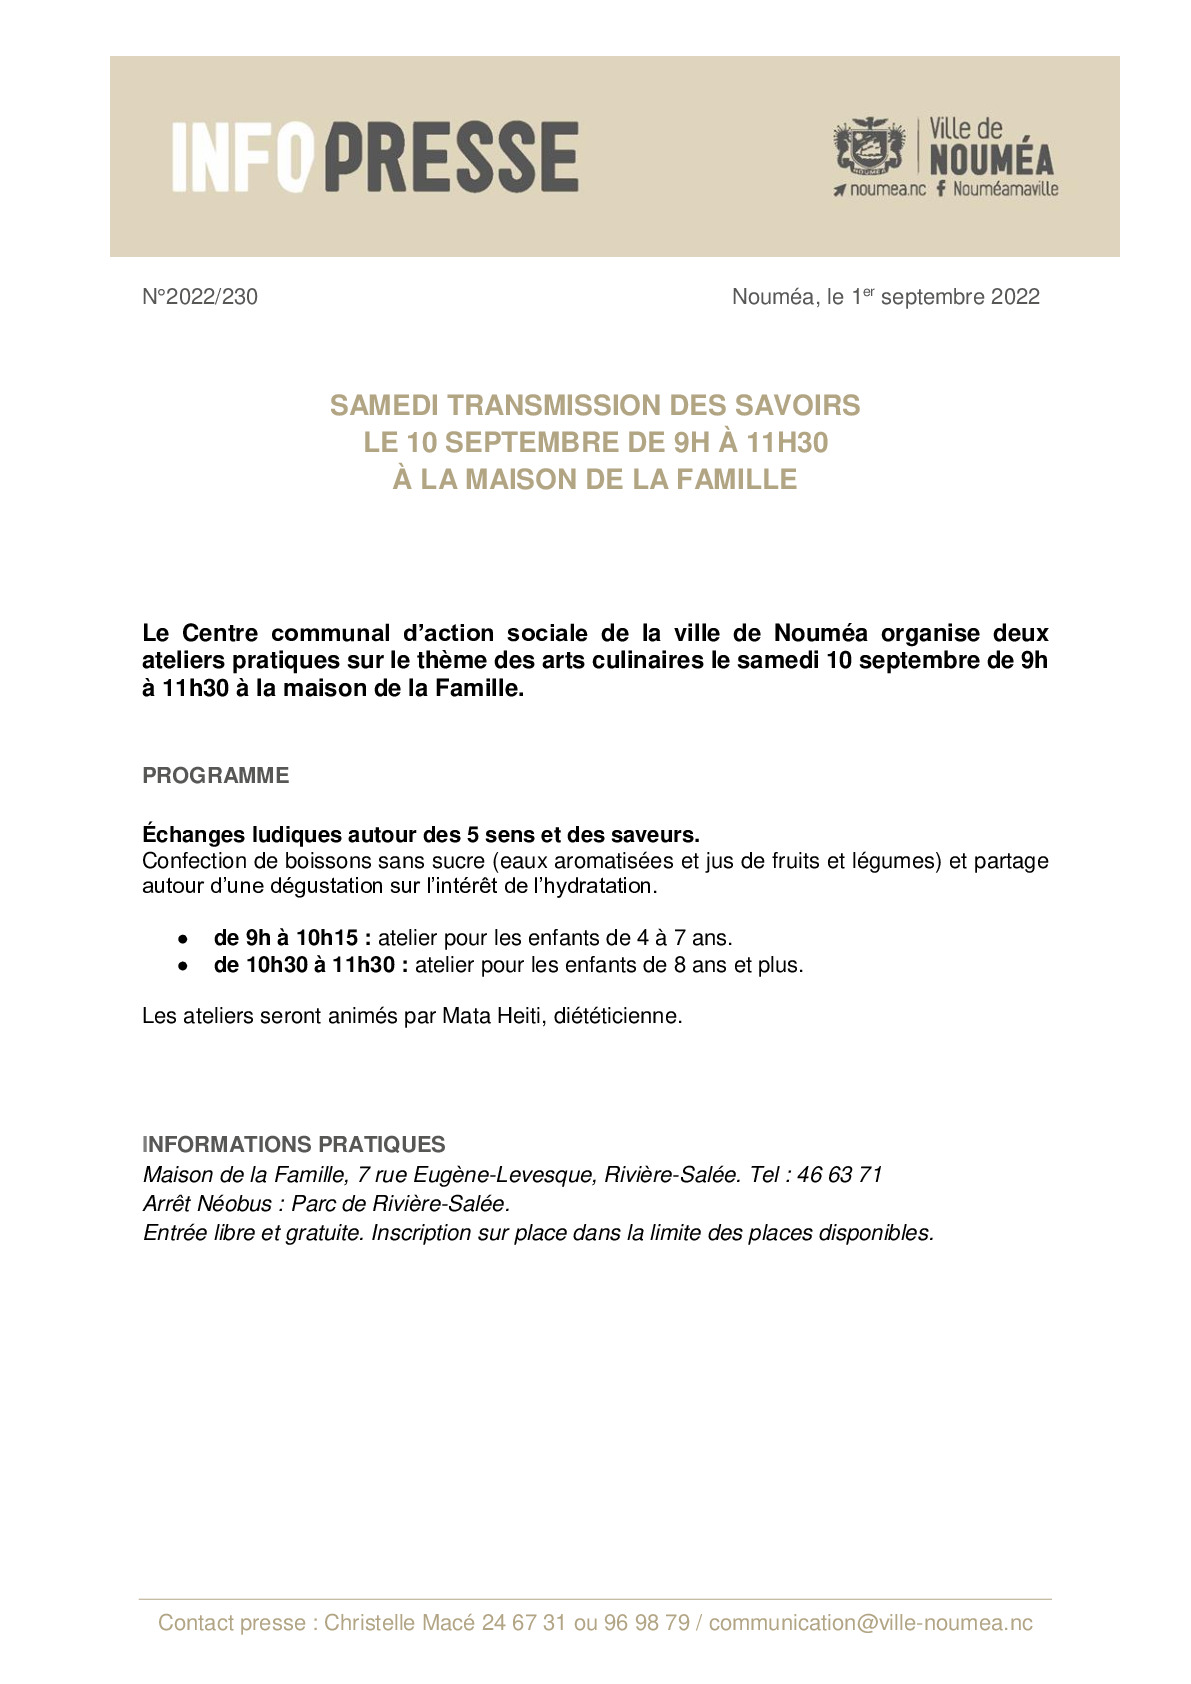 ip_230_samedi_transmission_des_savoirs1009.pdf